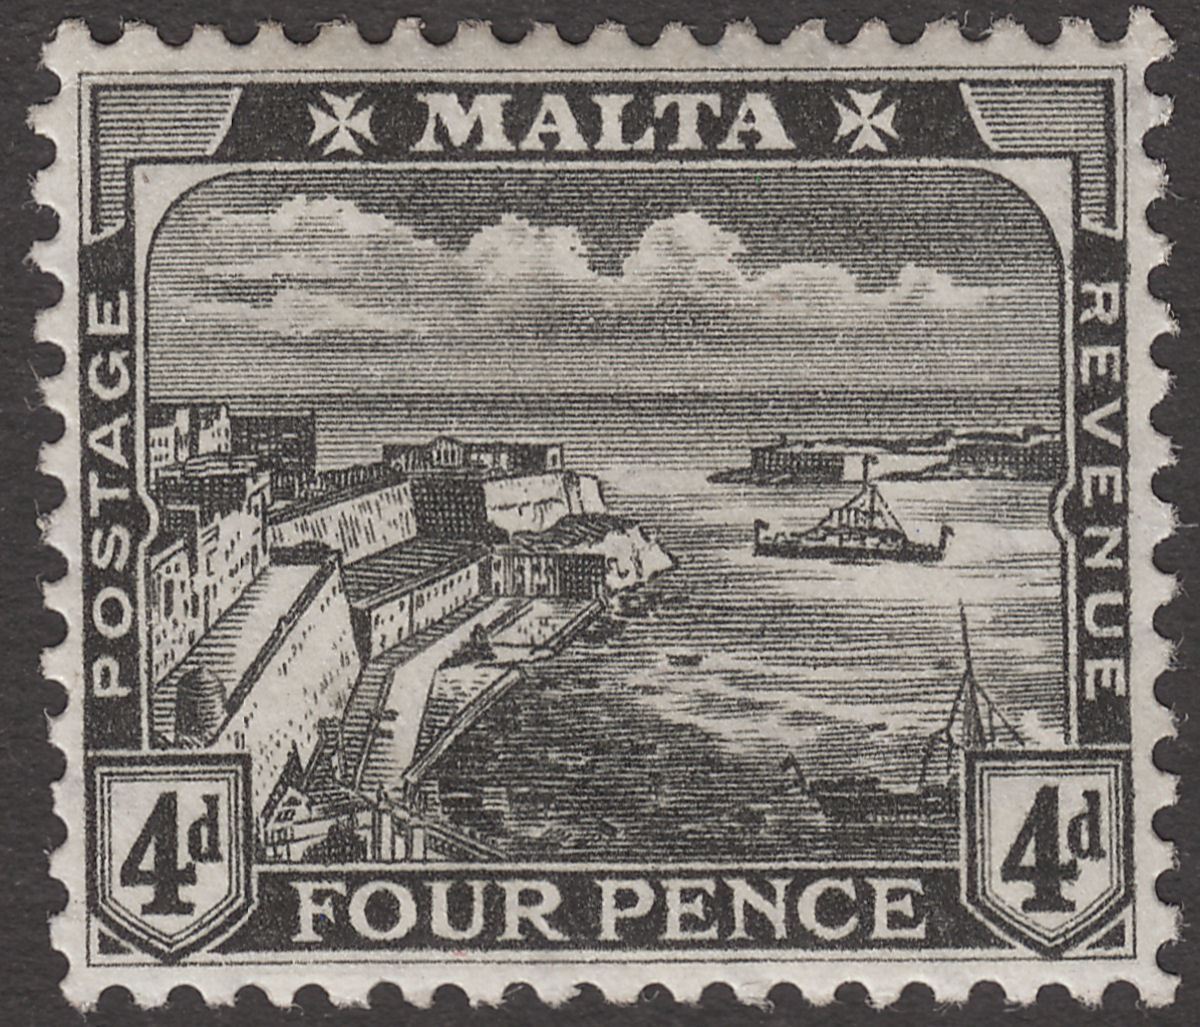 Malta 1915 KGV Valletta Harbour 4d Black Mint SG79 cat £15